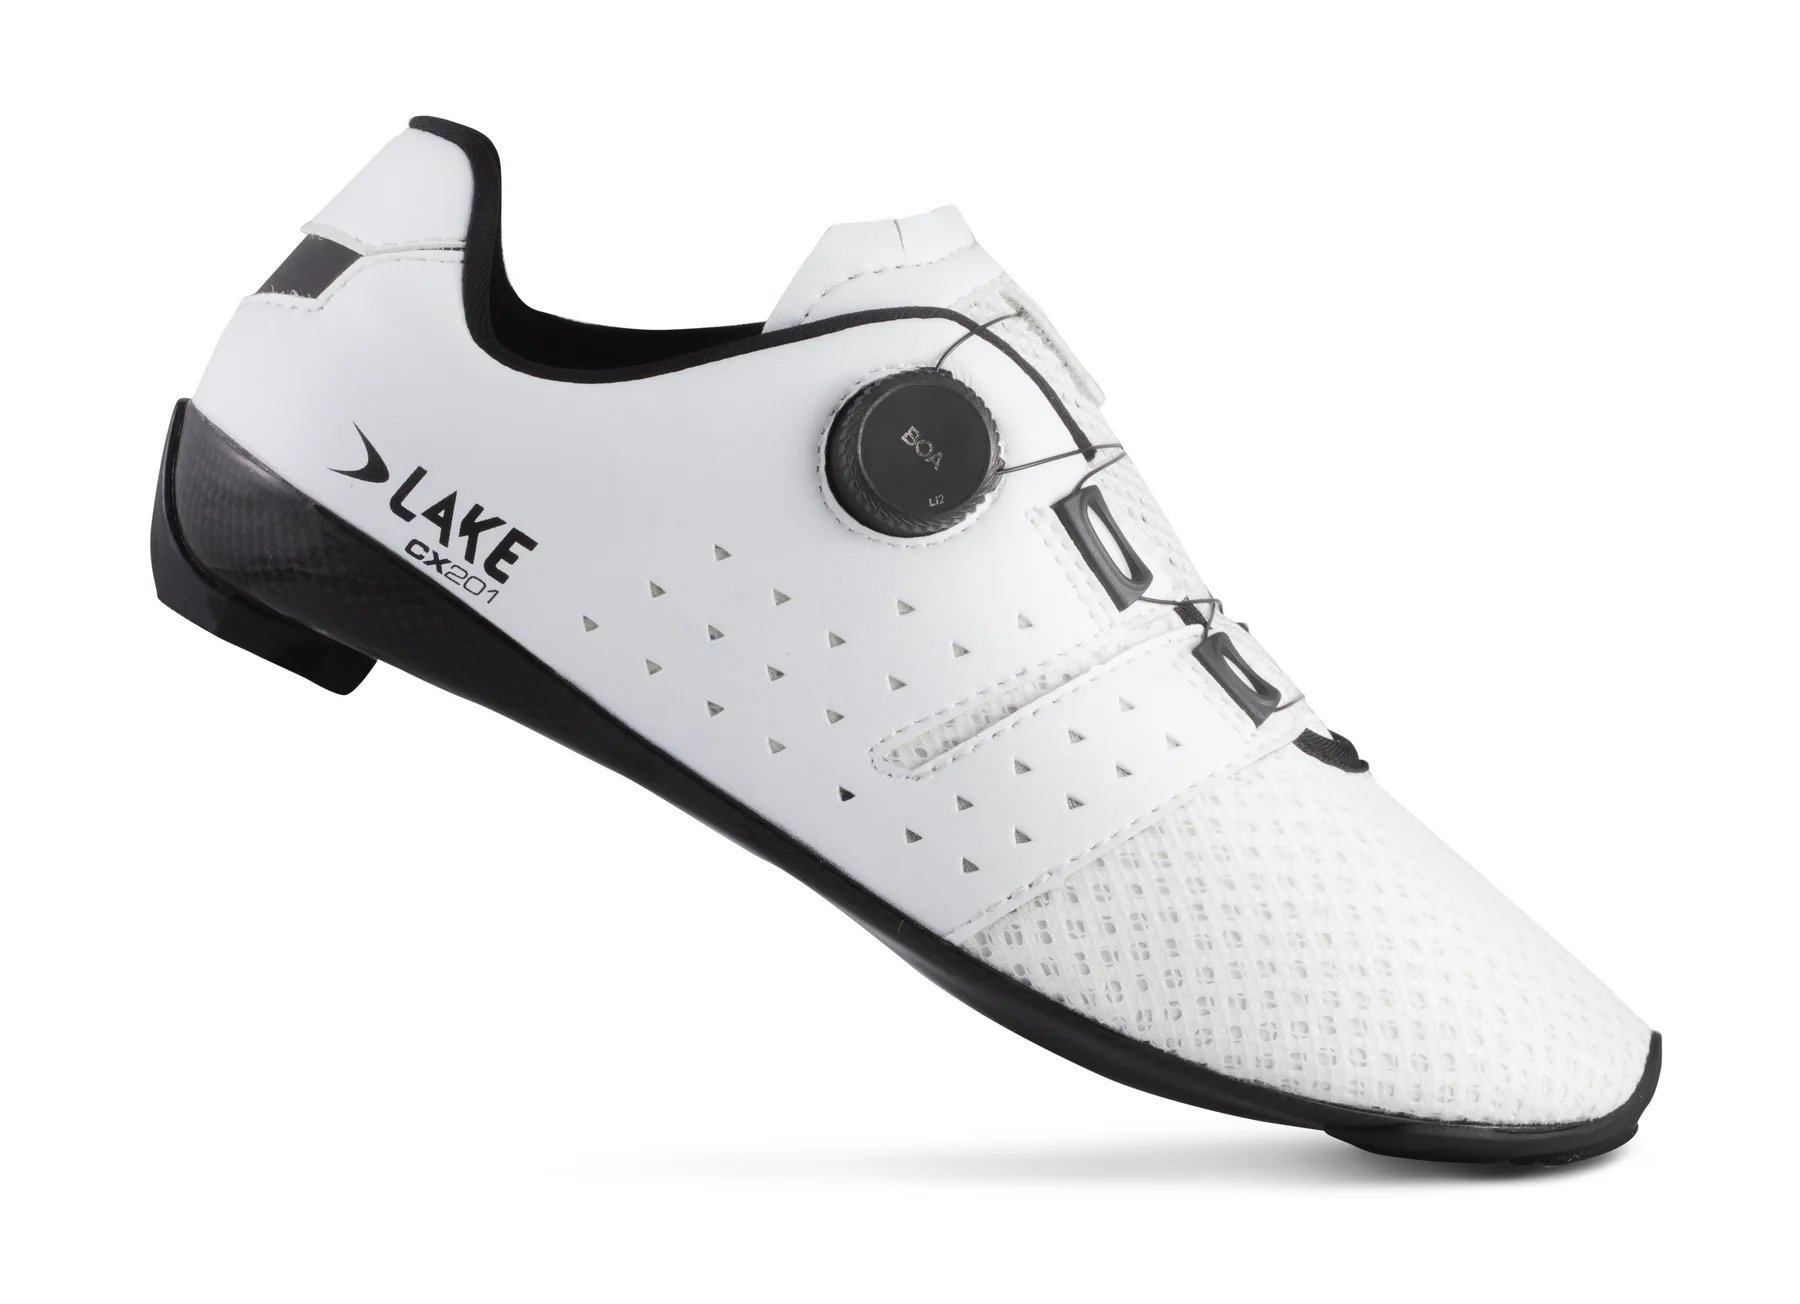 CX210 - Lake Road Cycling Shoes